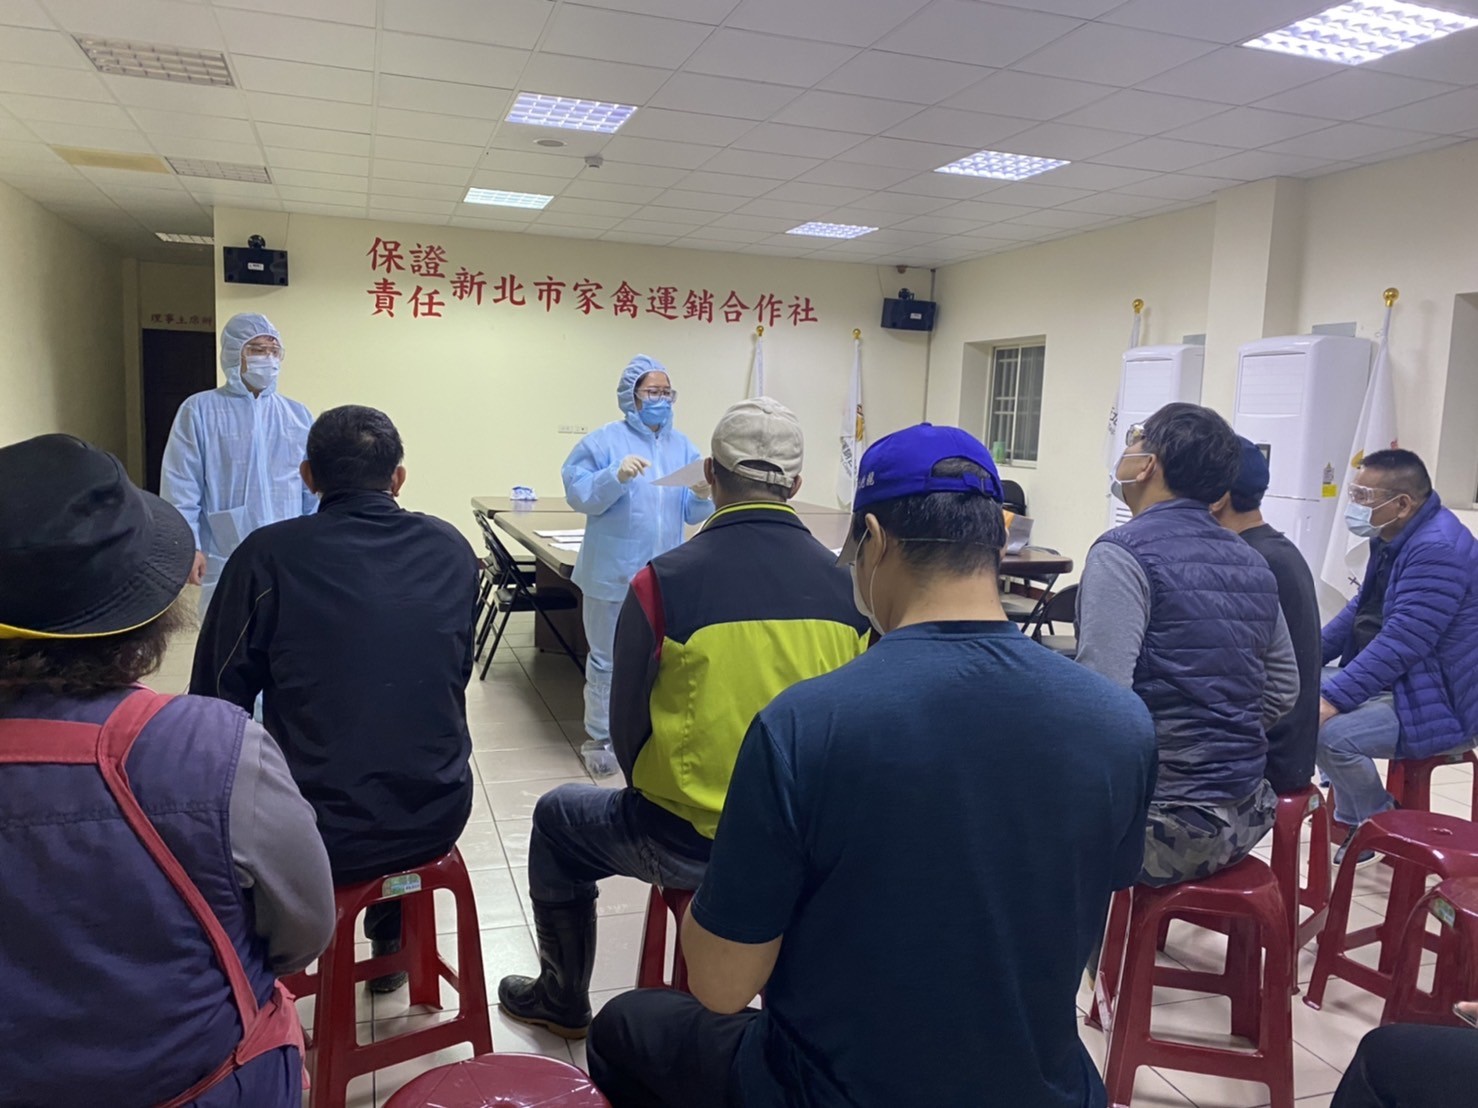 Biro Perlindungan Hewan dan Inspeksi Kesehatan Pemerintah Kota New Taipei melaksanakan pemeriksaan terhadap pelaksanaan pencegahan penularan pada malam hari. Sumber: Biro Perlindungan Hewan dan Inspeksi Kesehatan Pemerintah Kota New Taipei